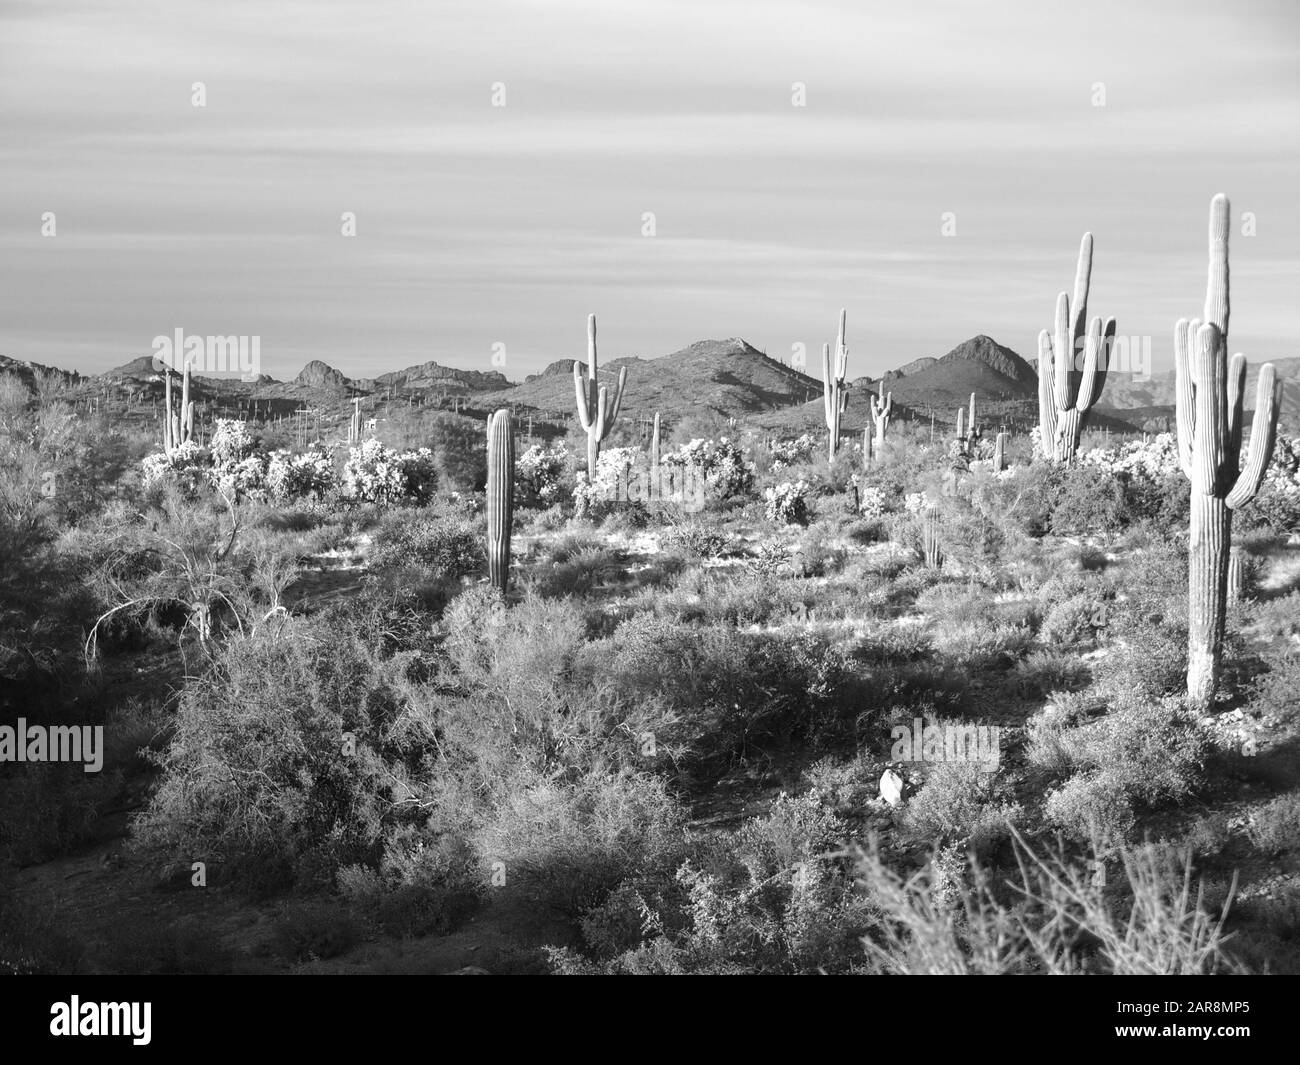 Black and White Arizona desert scene near Mesa, Arizona. Tall Saguaro cactus dominate the landscape at sunset. Stock Photo